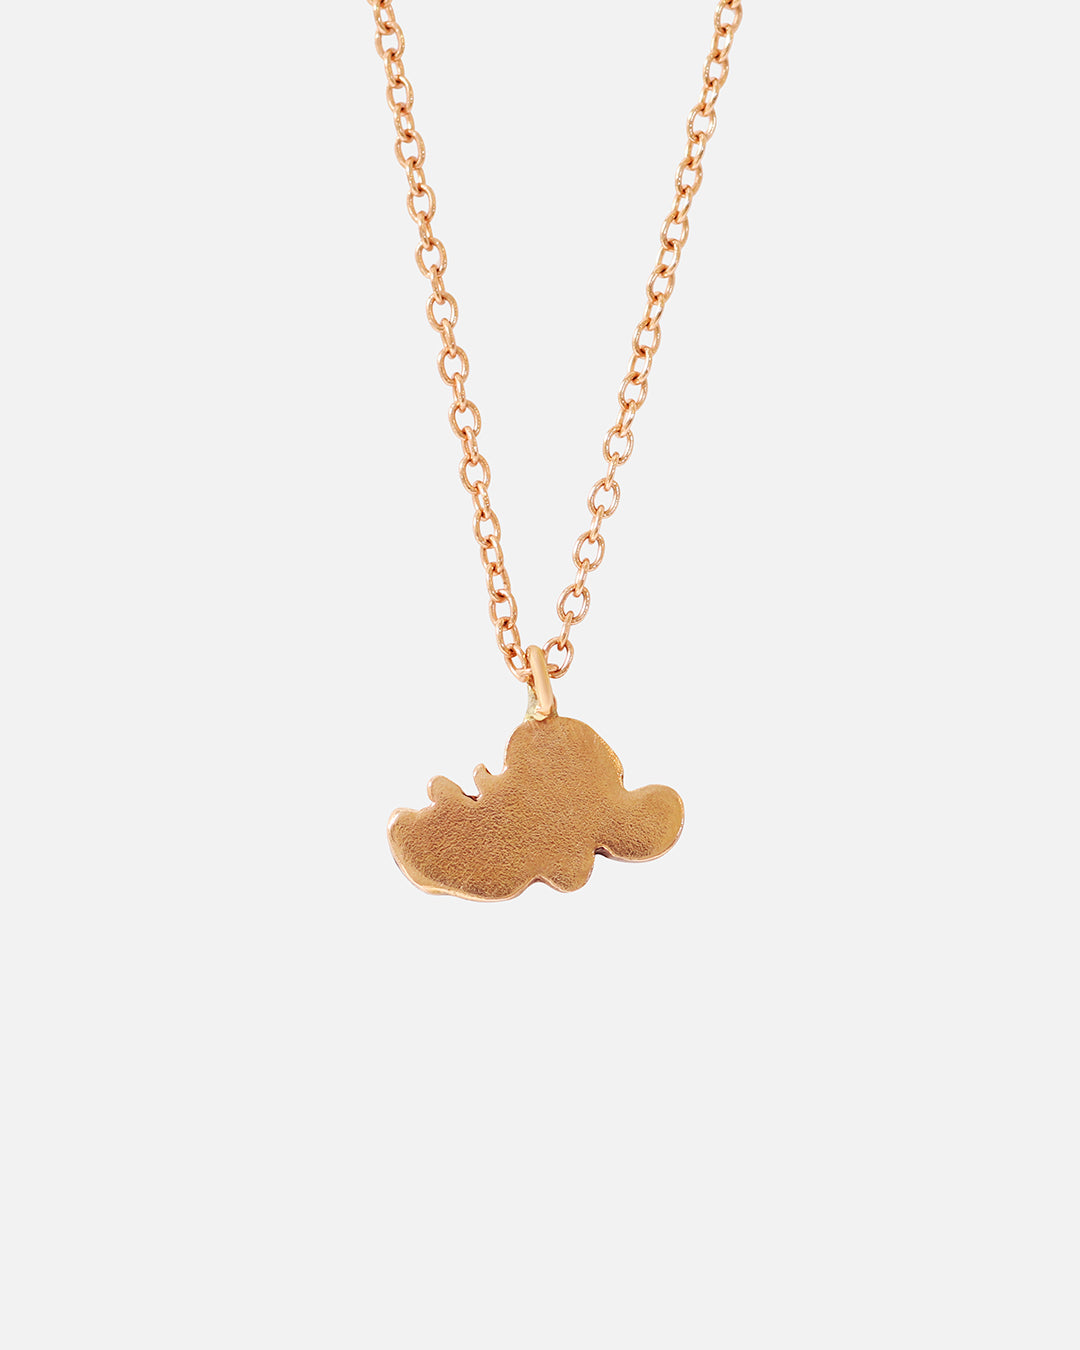 Cloud / Single Medium By fitzgerald jewelry in pendants Category